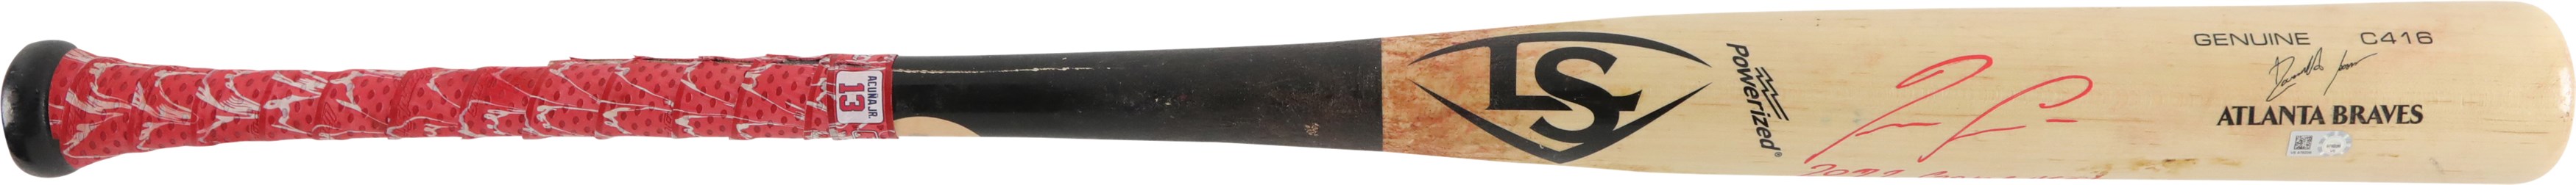 - 6/10/22 Ronald Acuna Jr. Atlanta Braves Career Hits #461 & 462 Signed Game Used Bat (Photo-Matched & MLB Holo)